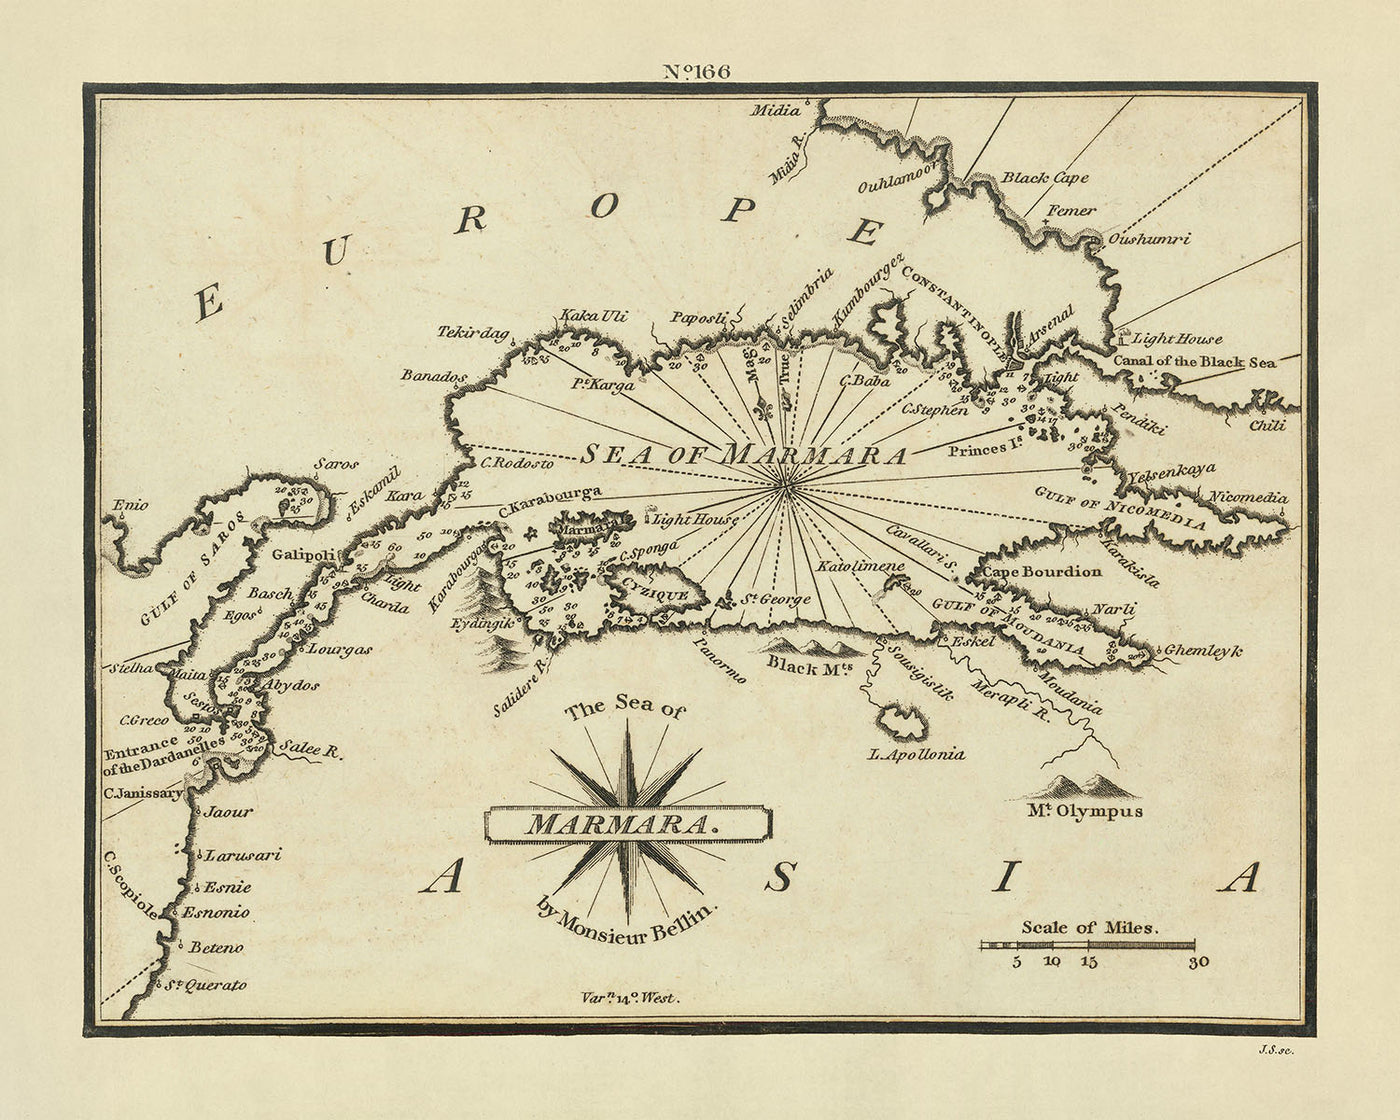 Carte nautique de la vieille mer de Marmara par Heather, 1802 : Dardanelles, Bosphore, Istanbul